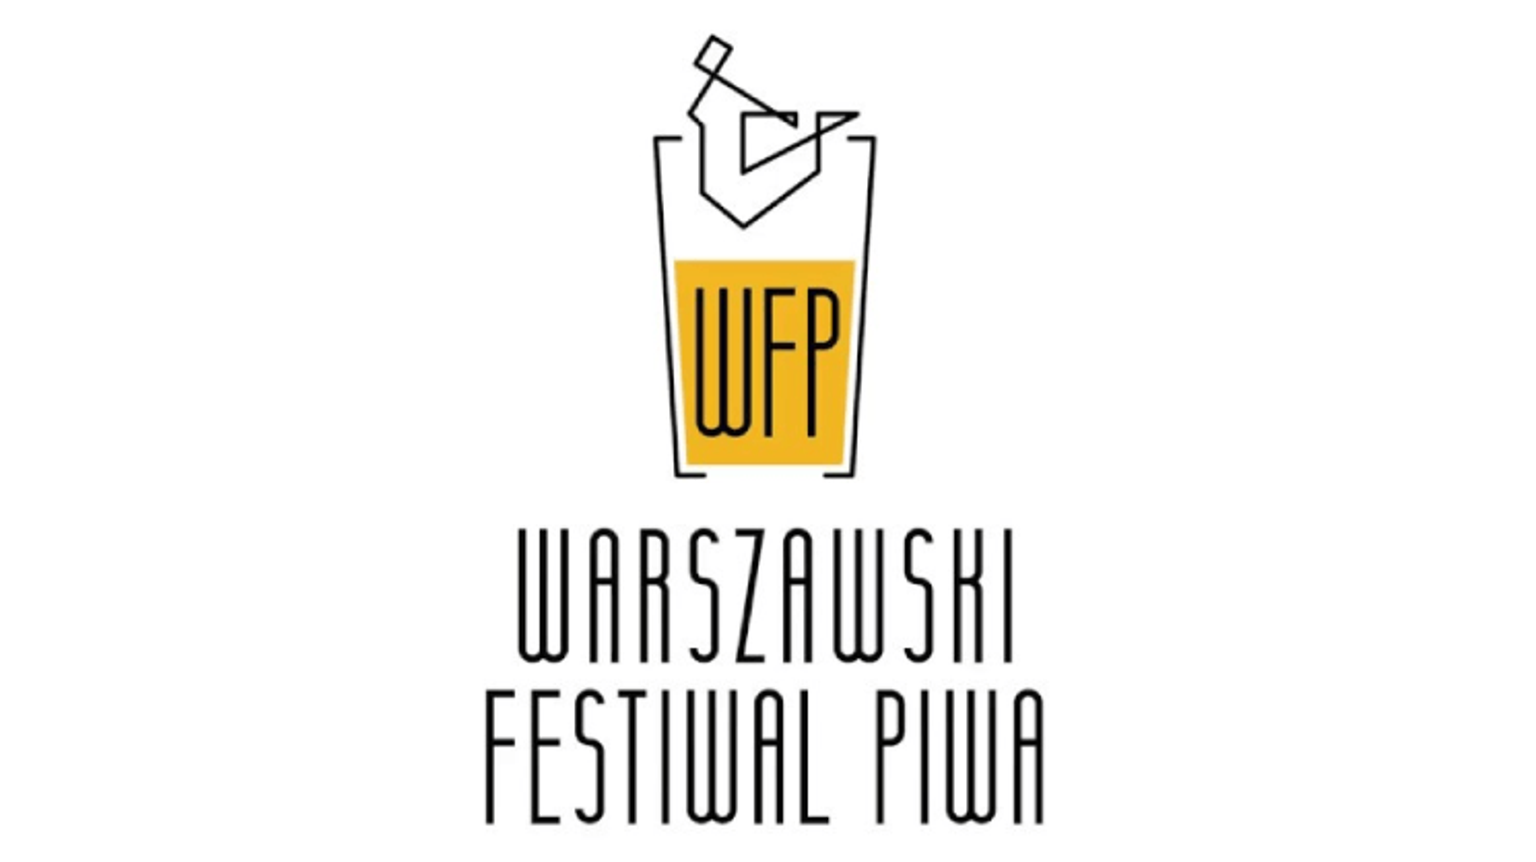 thumbnail for blog article named: Warsaw Beer Festival